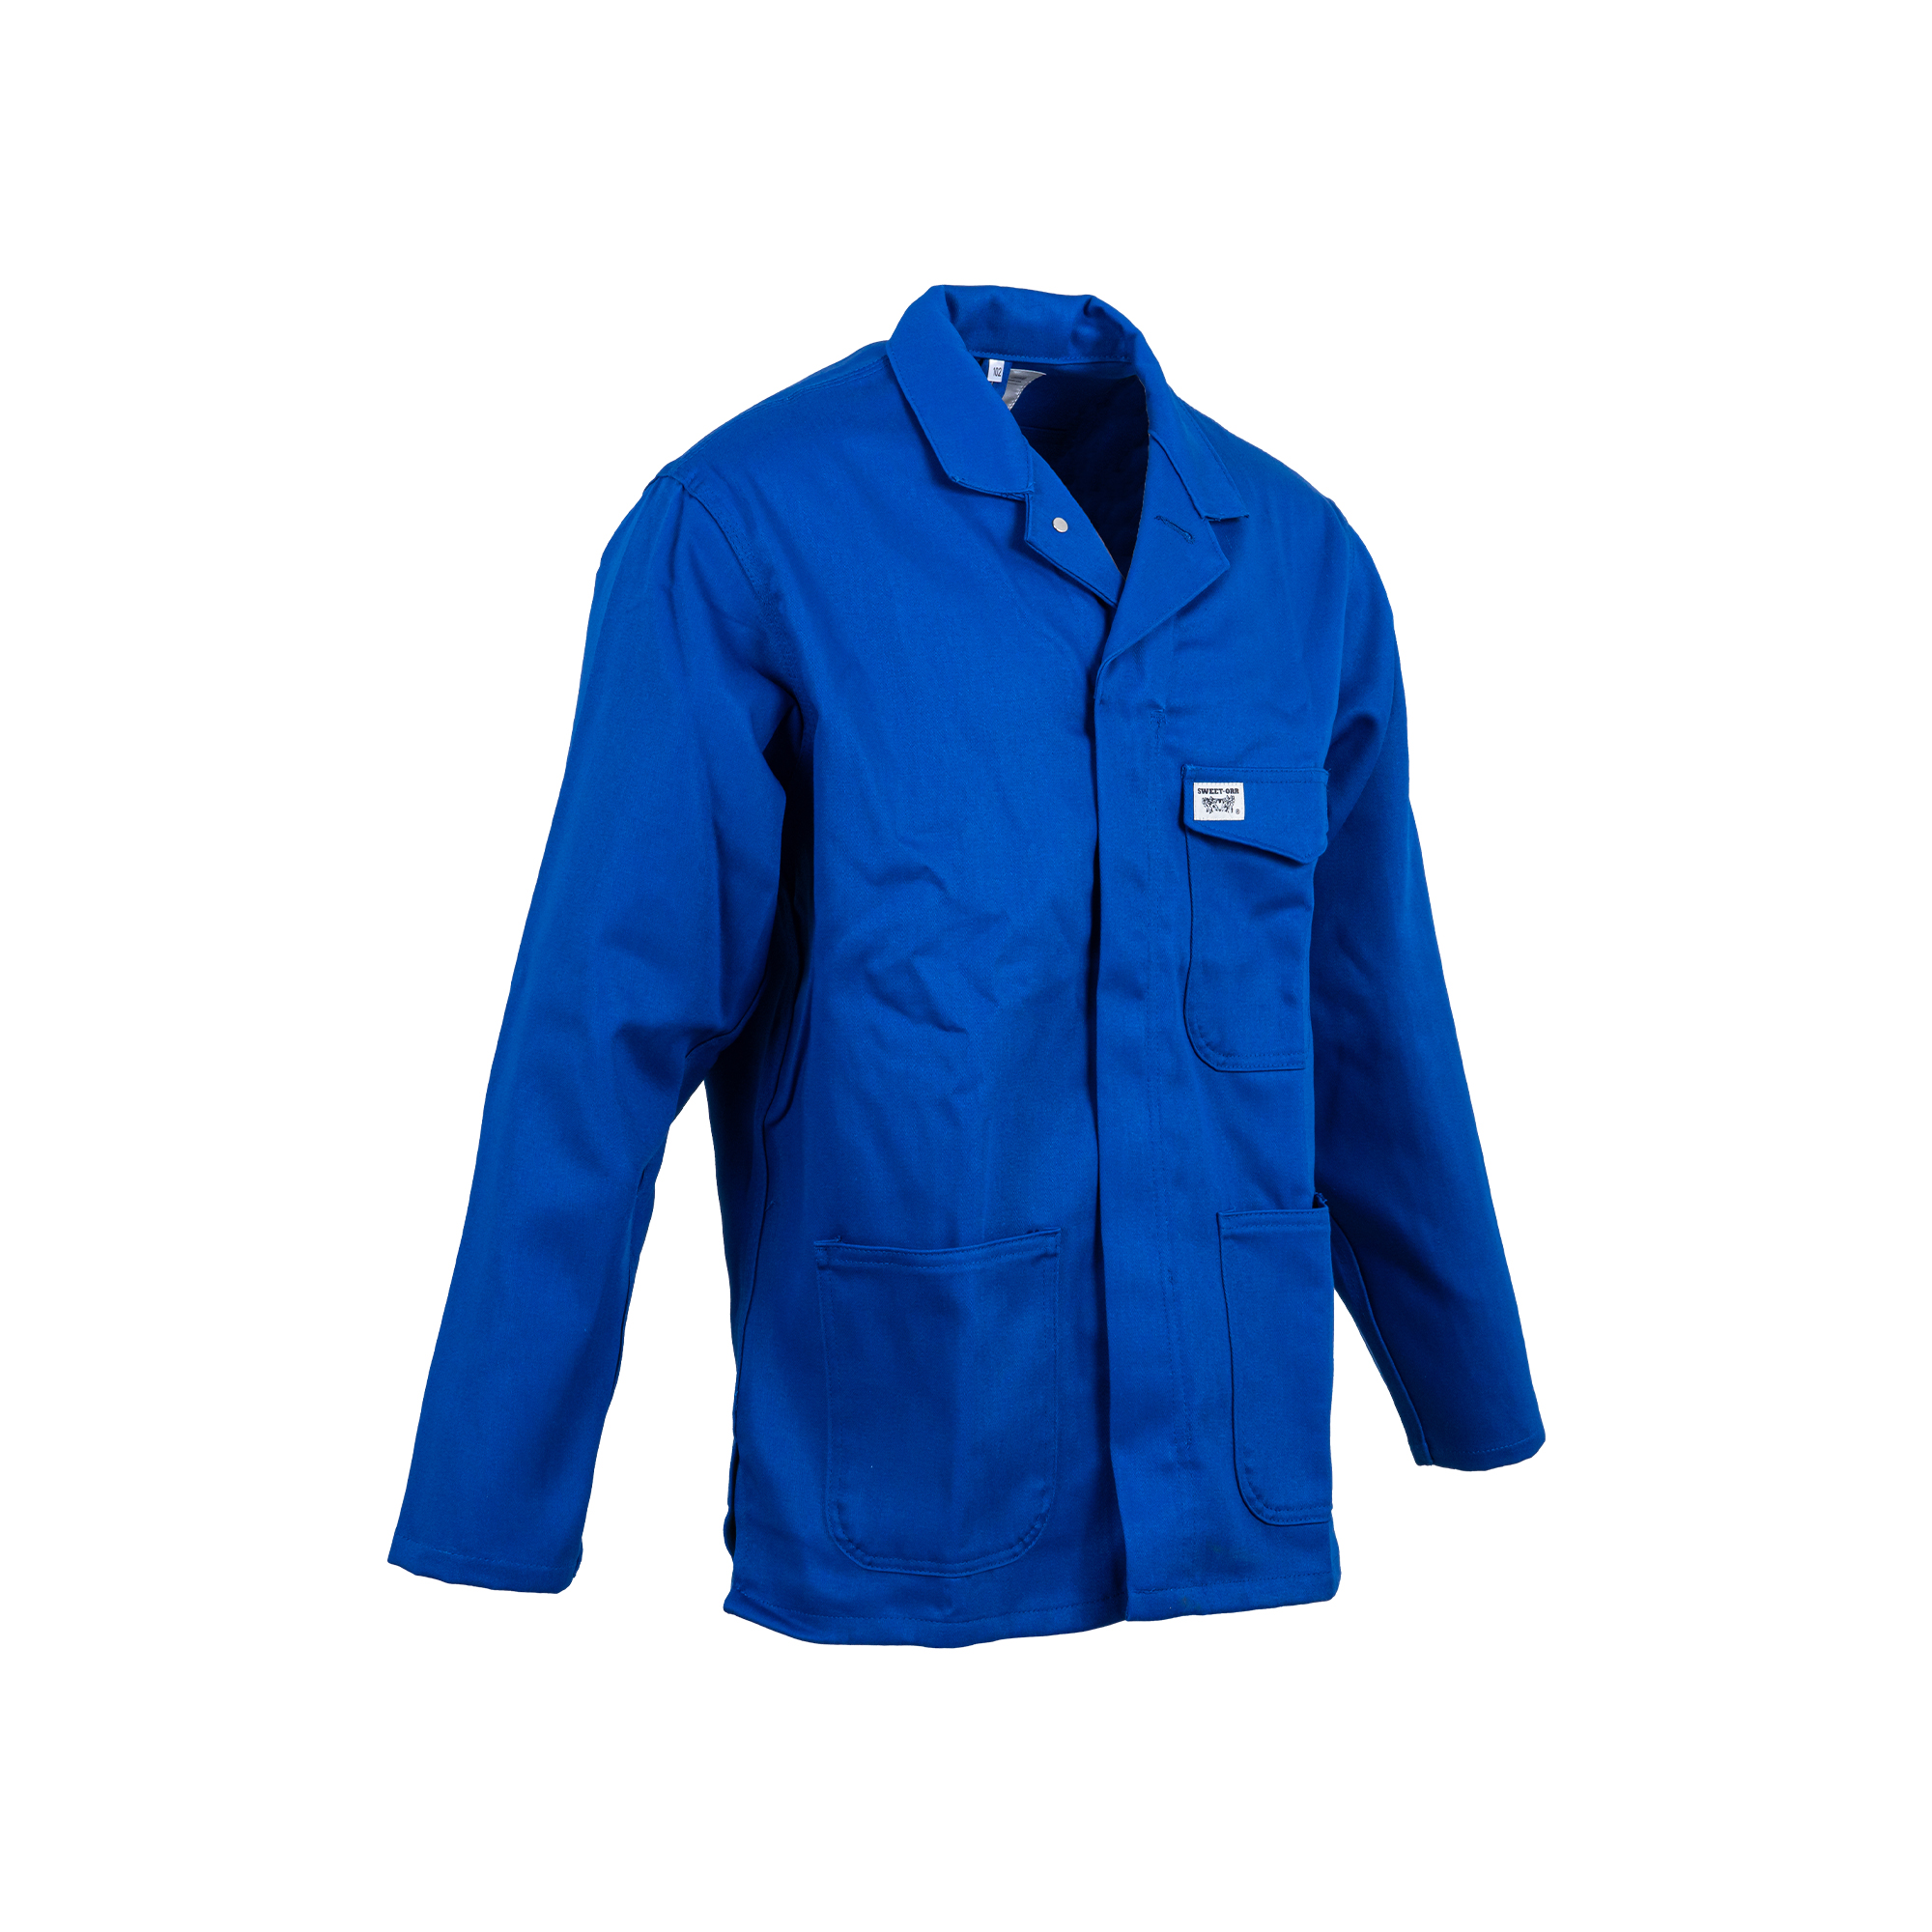 Sweet-Orr Heavy Duty Overall Jacket Royal Blue - Protekta Safety Gear